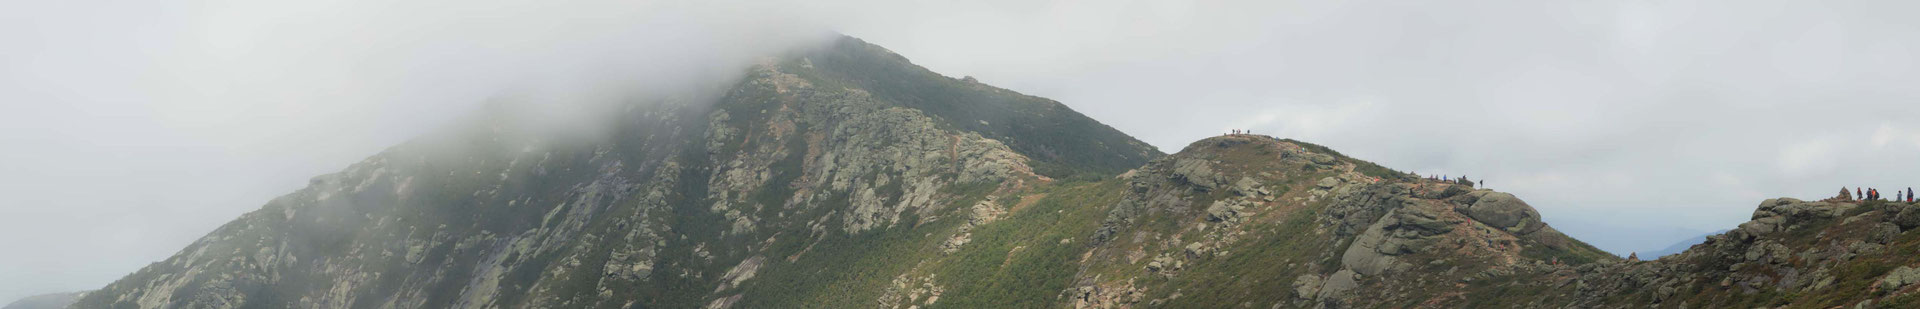 Mount Lafayette and Franconia Ridge Trail, NH, USA. Canon EOS 80D, EF 70-300mm f/4-5.6 IS II USM à 70mm, f/11, 1/80 s, 800 ISO